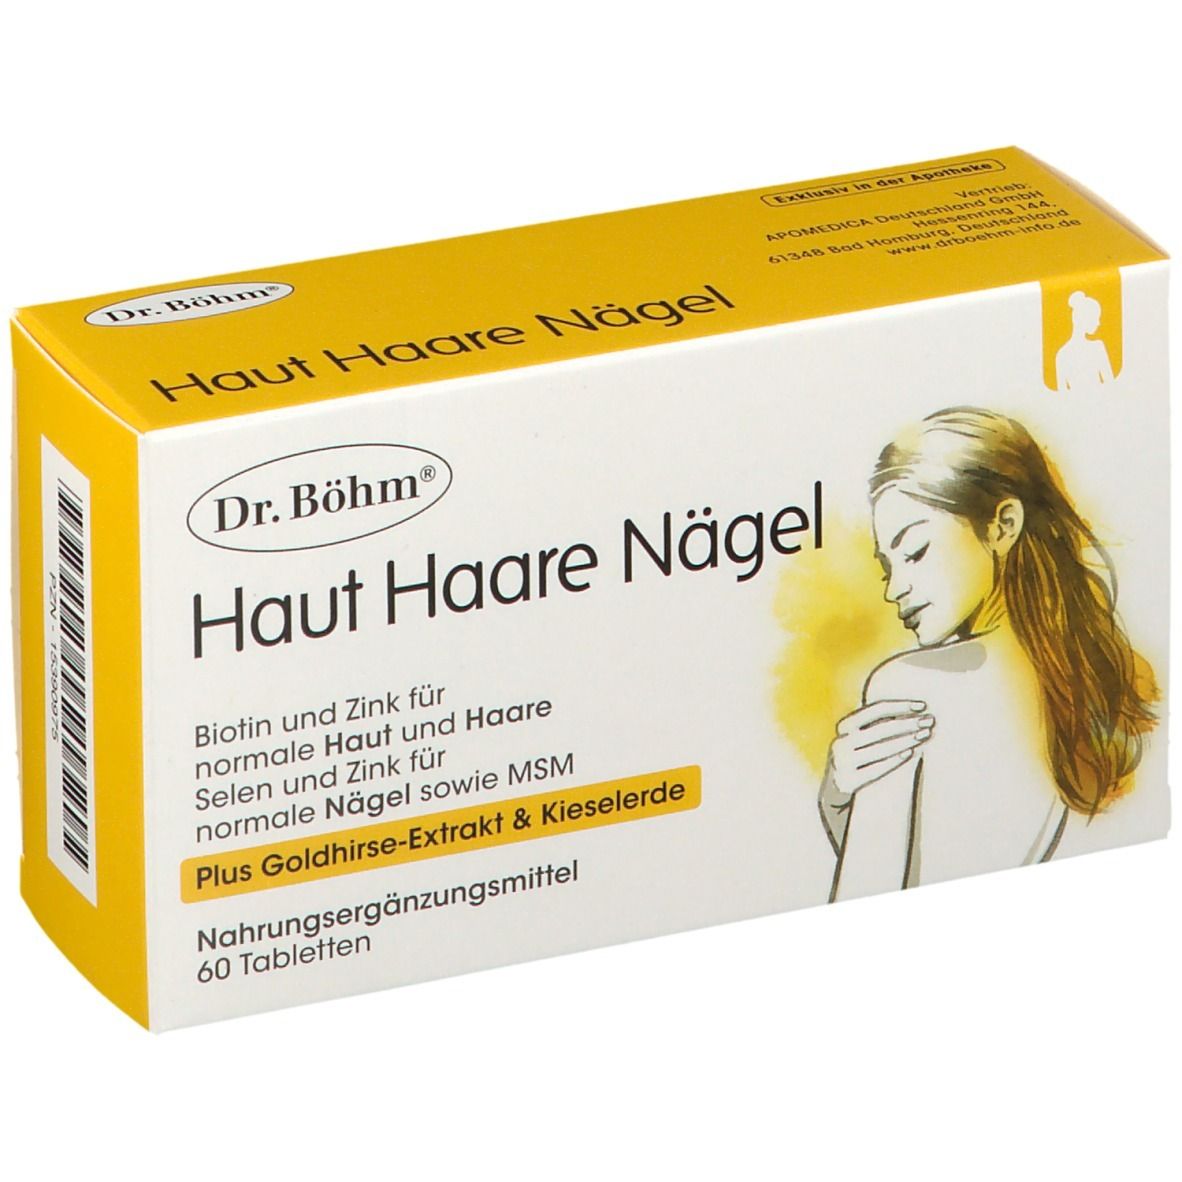  Dr. Böhm® Haut Haare Nägel